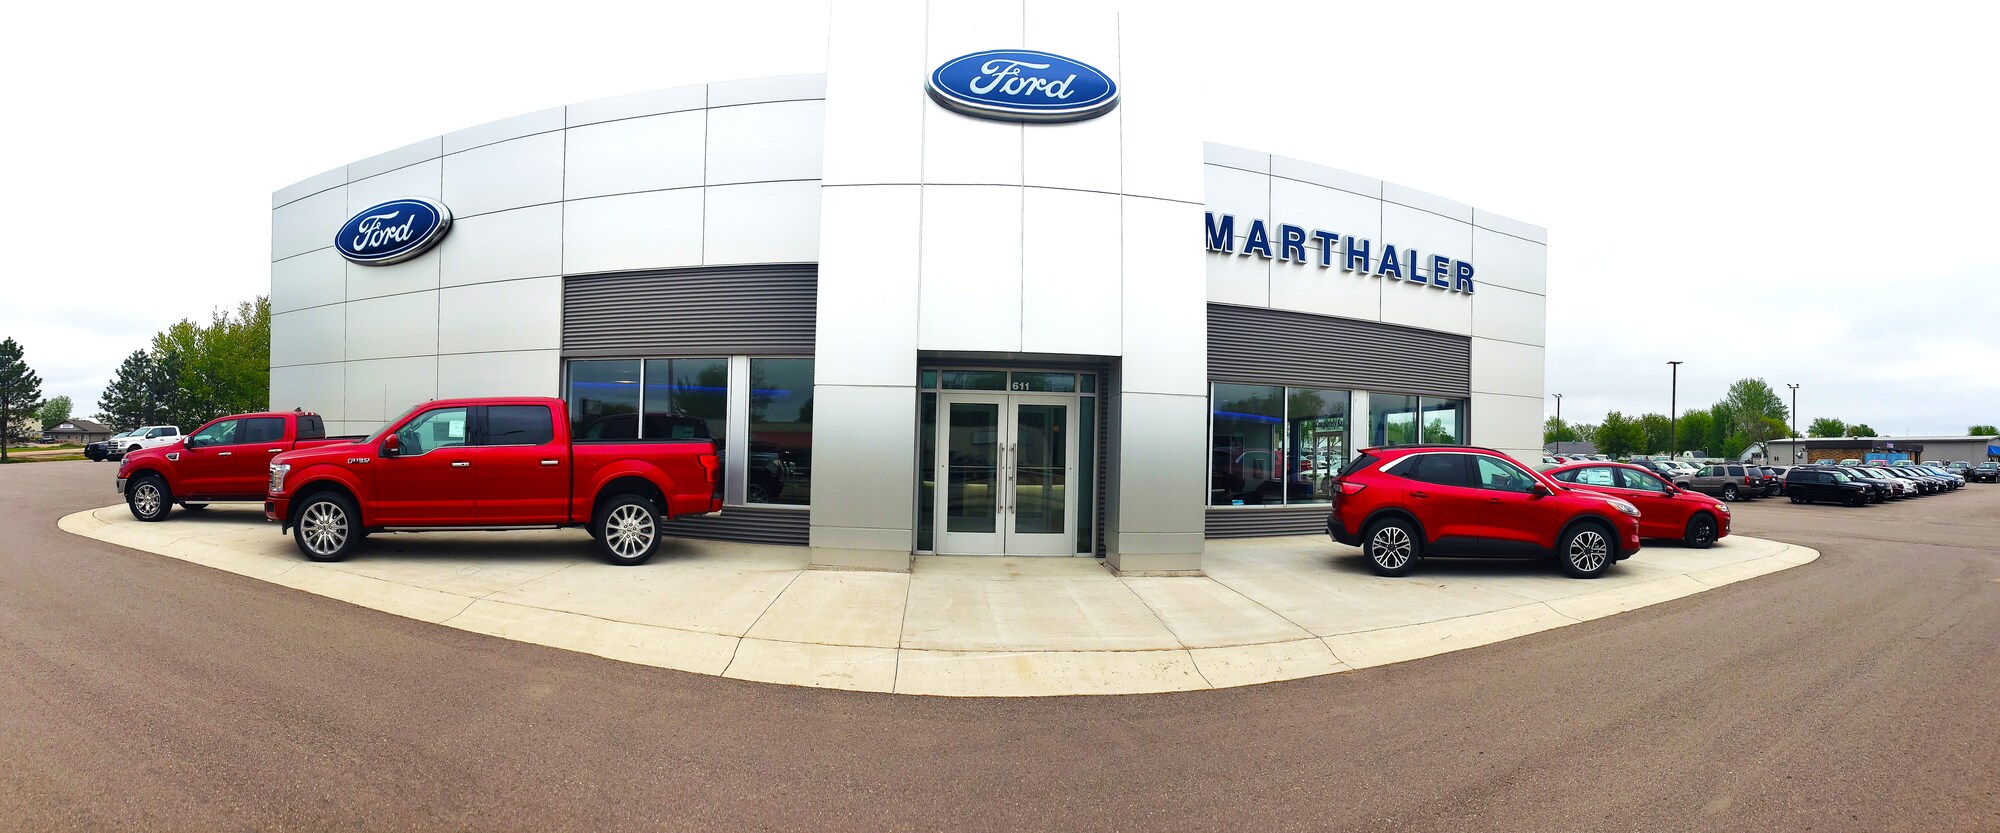 Marthaler Ford of Worthington | Ford Dealership in Worthington, MN